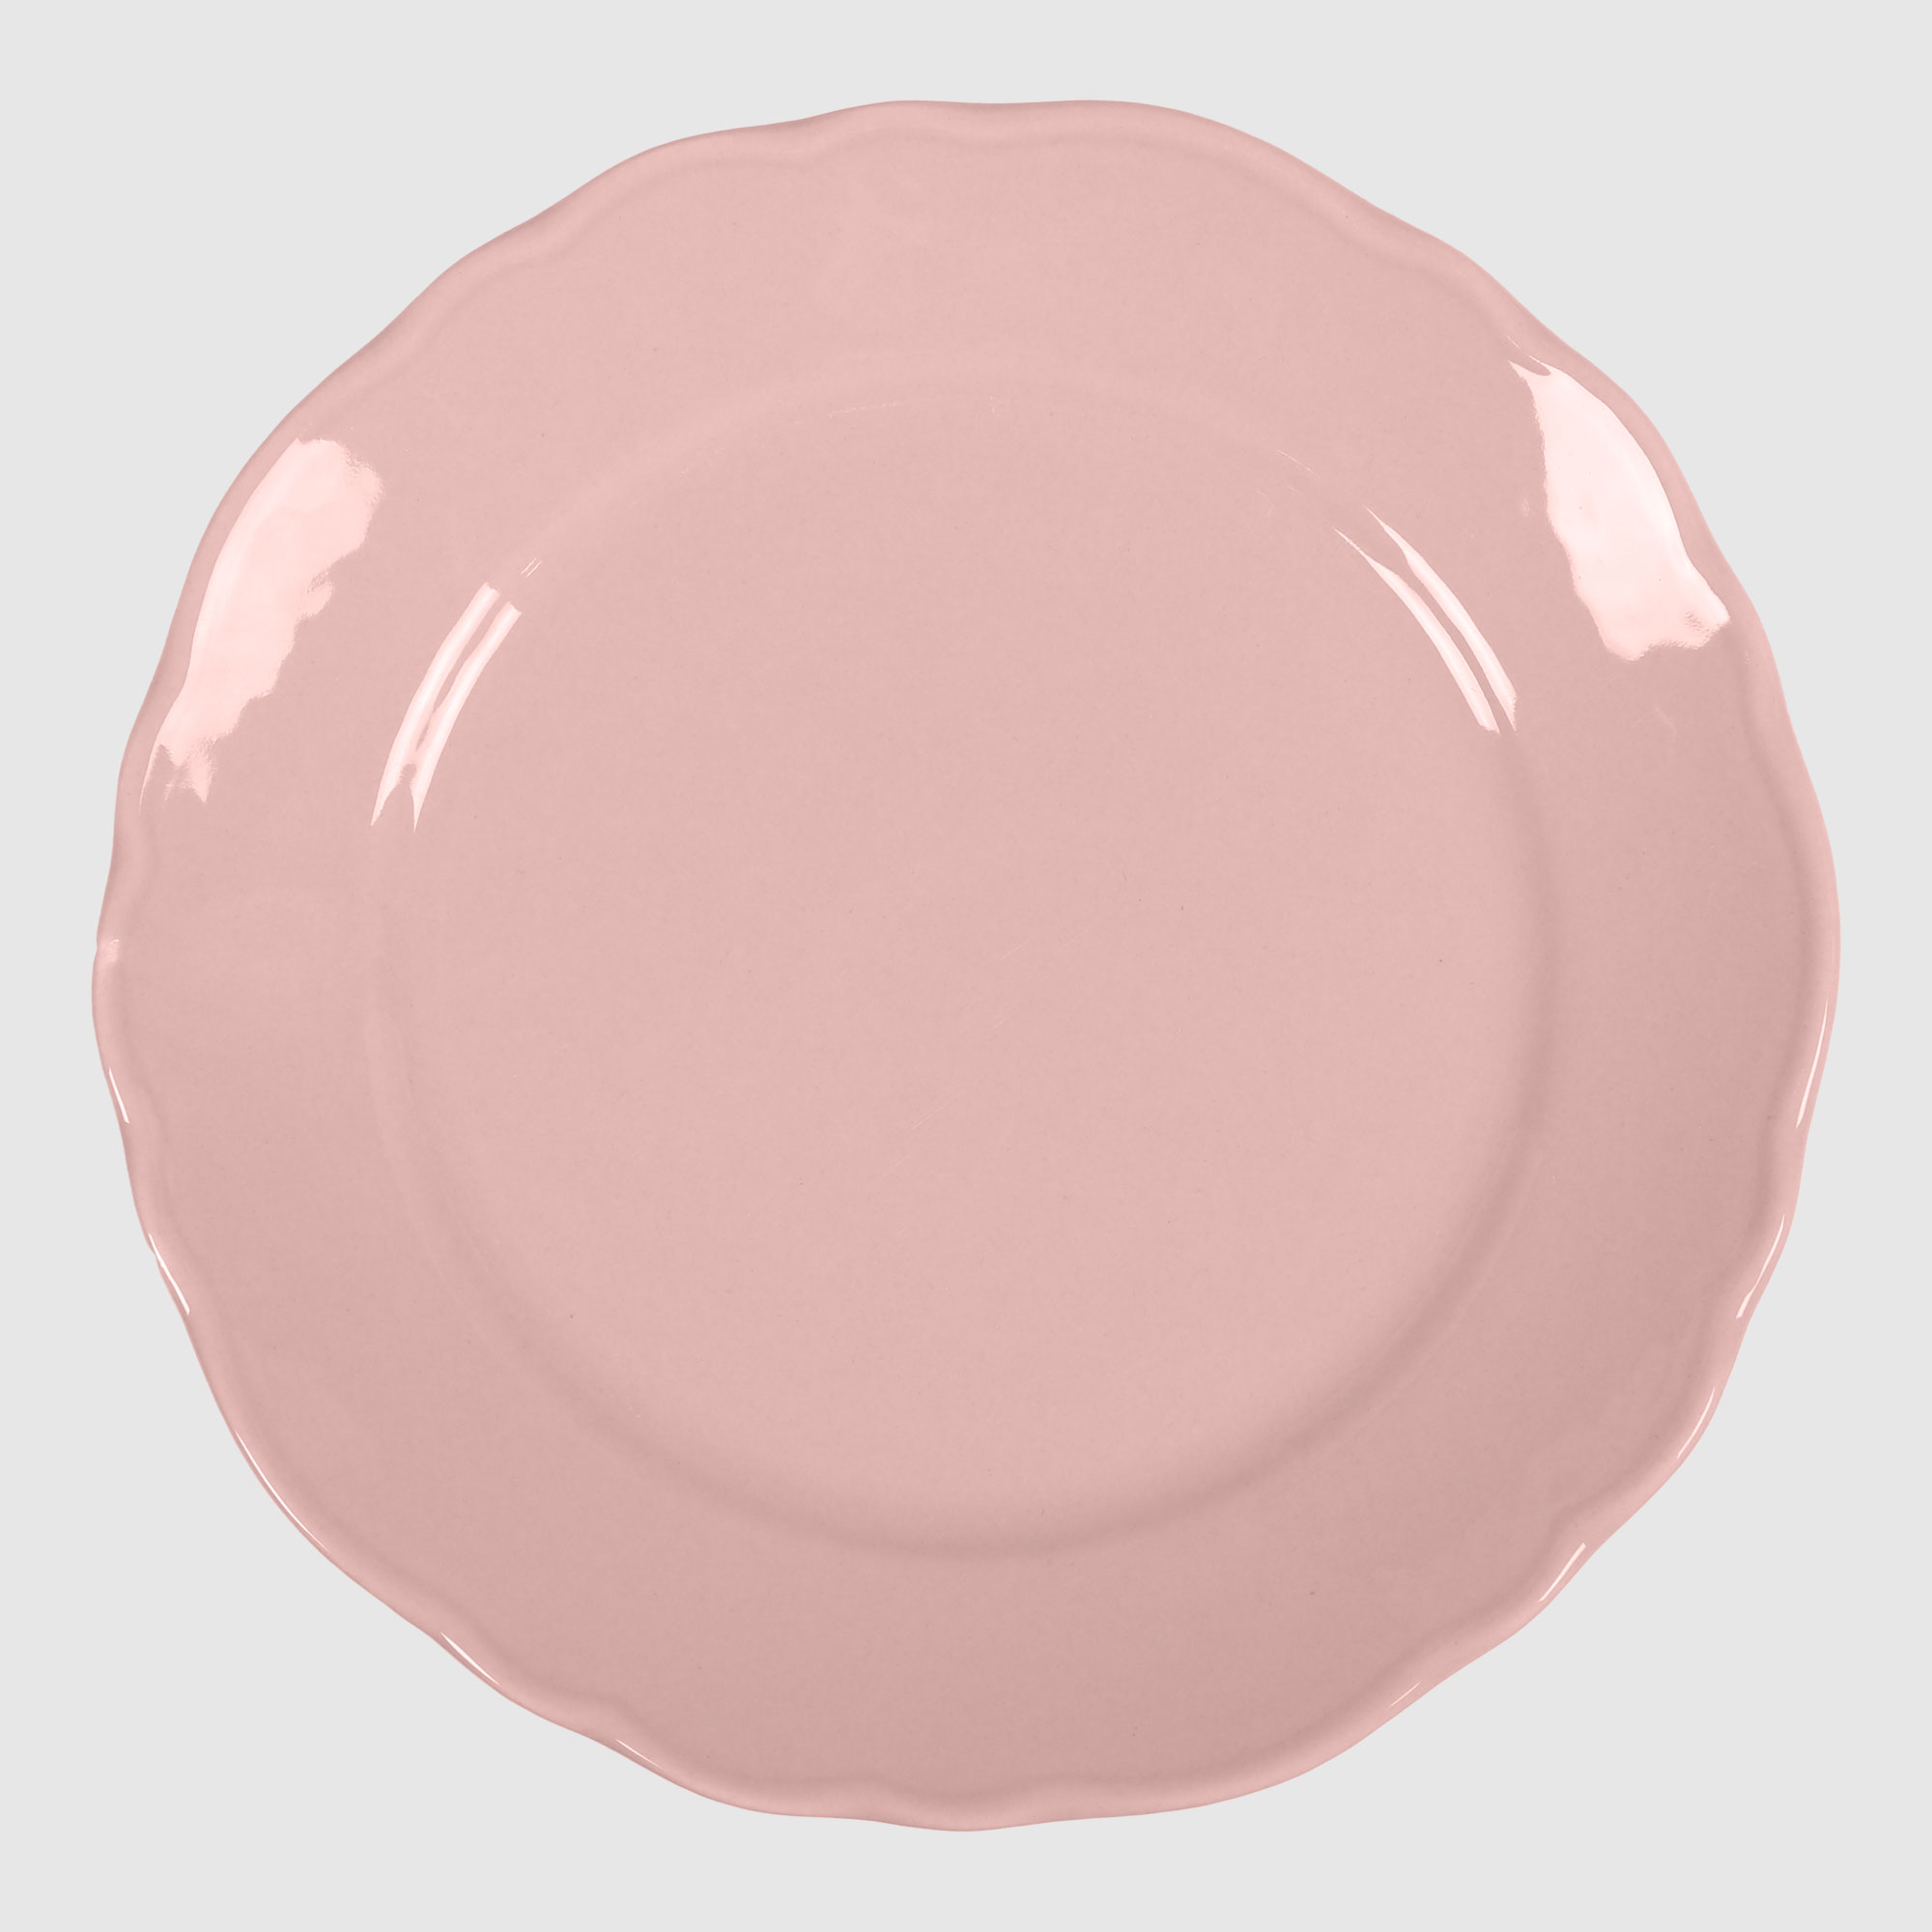 Тарелка Kutahya porselen Lar розовая 19 см беговая тарелка carno для грызунов 18 х 18 х 11 см розовая